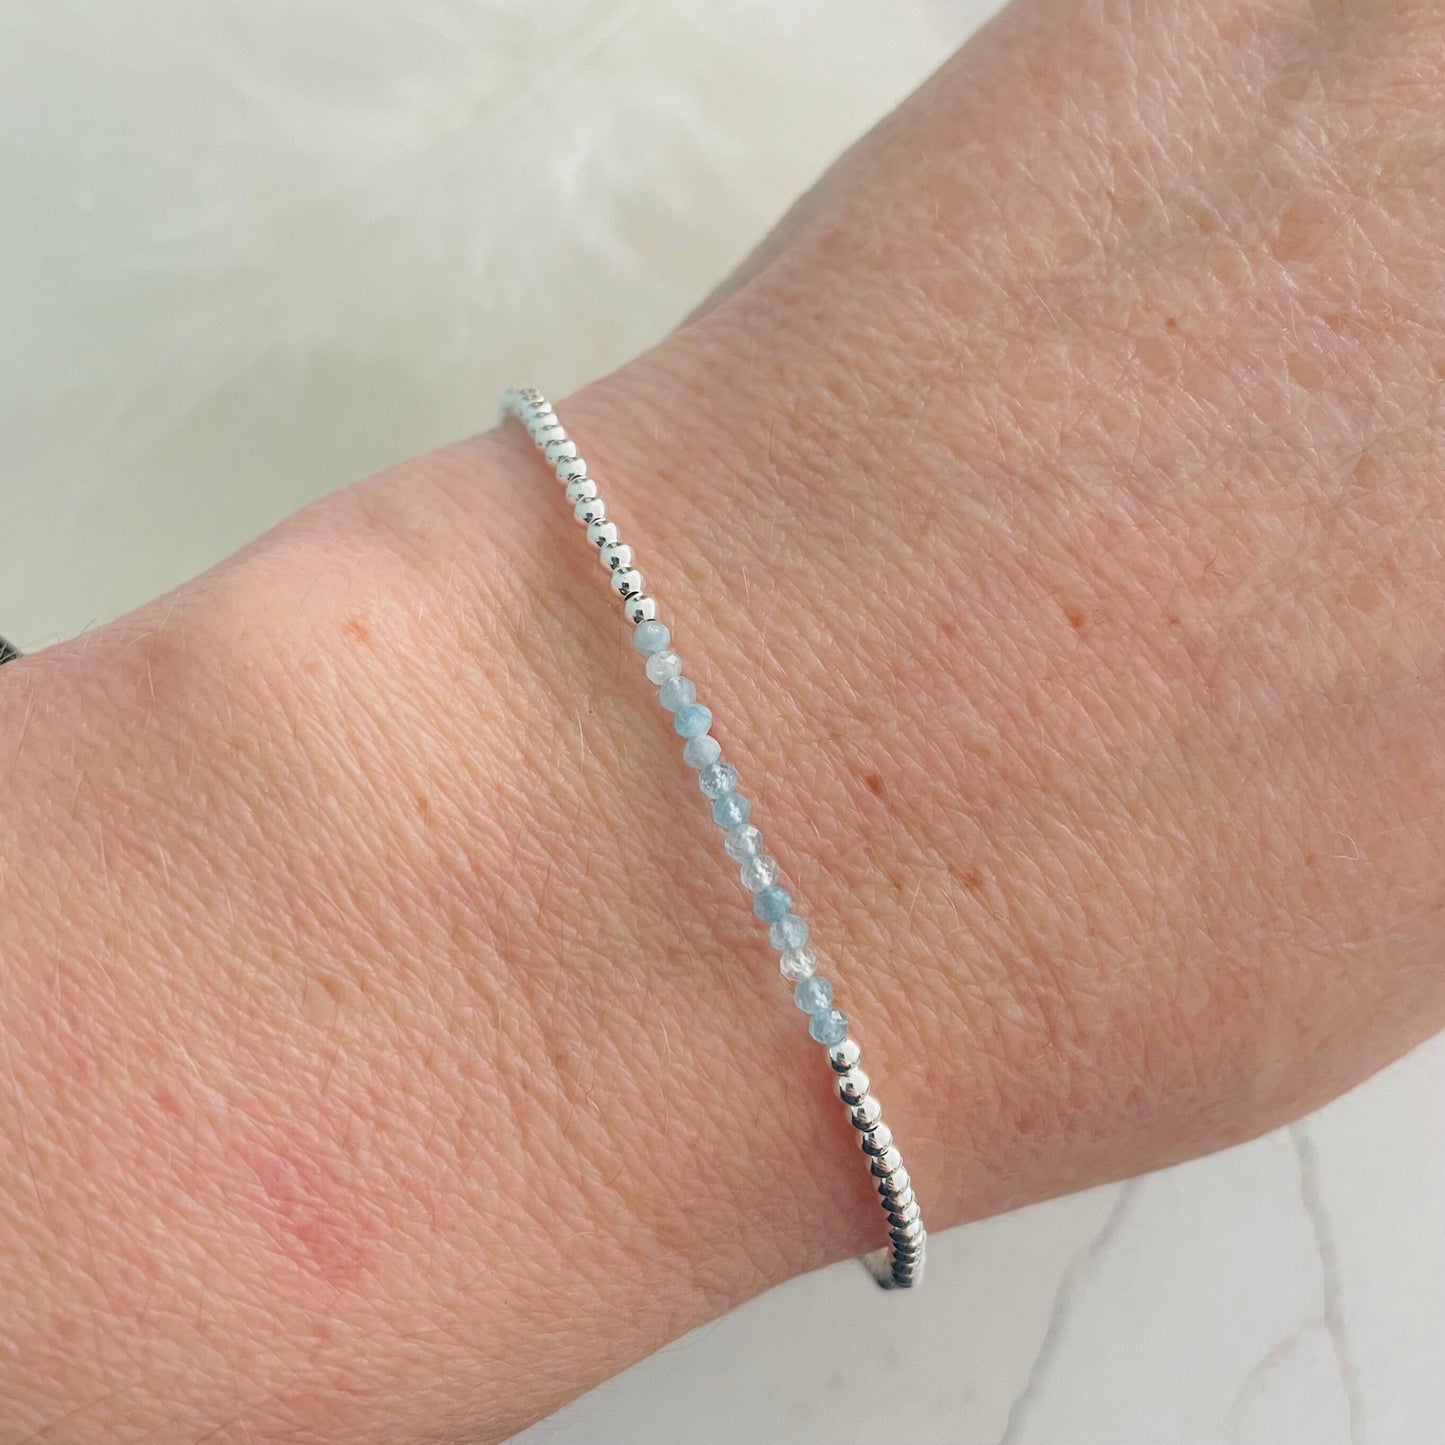 Very Dainty Aquamarine Bracelet in Sterling Silver, Thin March Birthstone bracelet